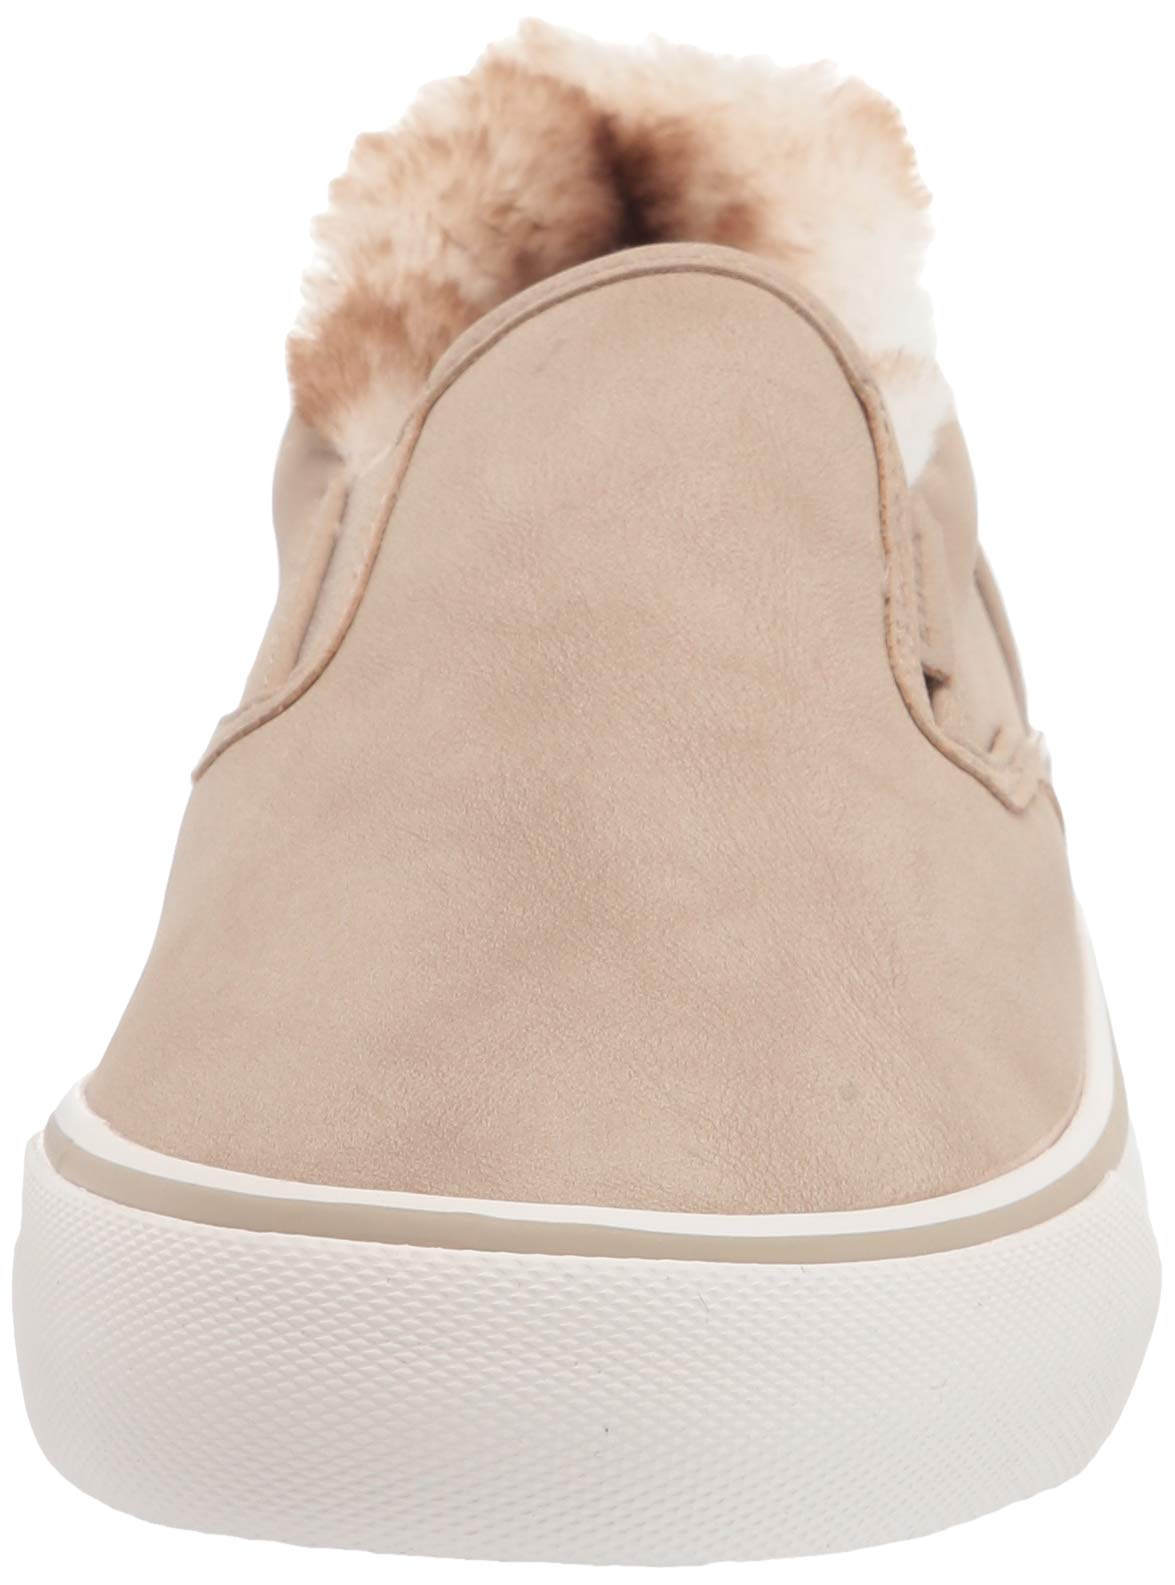 Lugz womens Clipper Lx Fur Classic Slip-on Fashion Sneaker, Fawn/Cream/Off White, 9 US